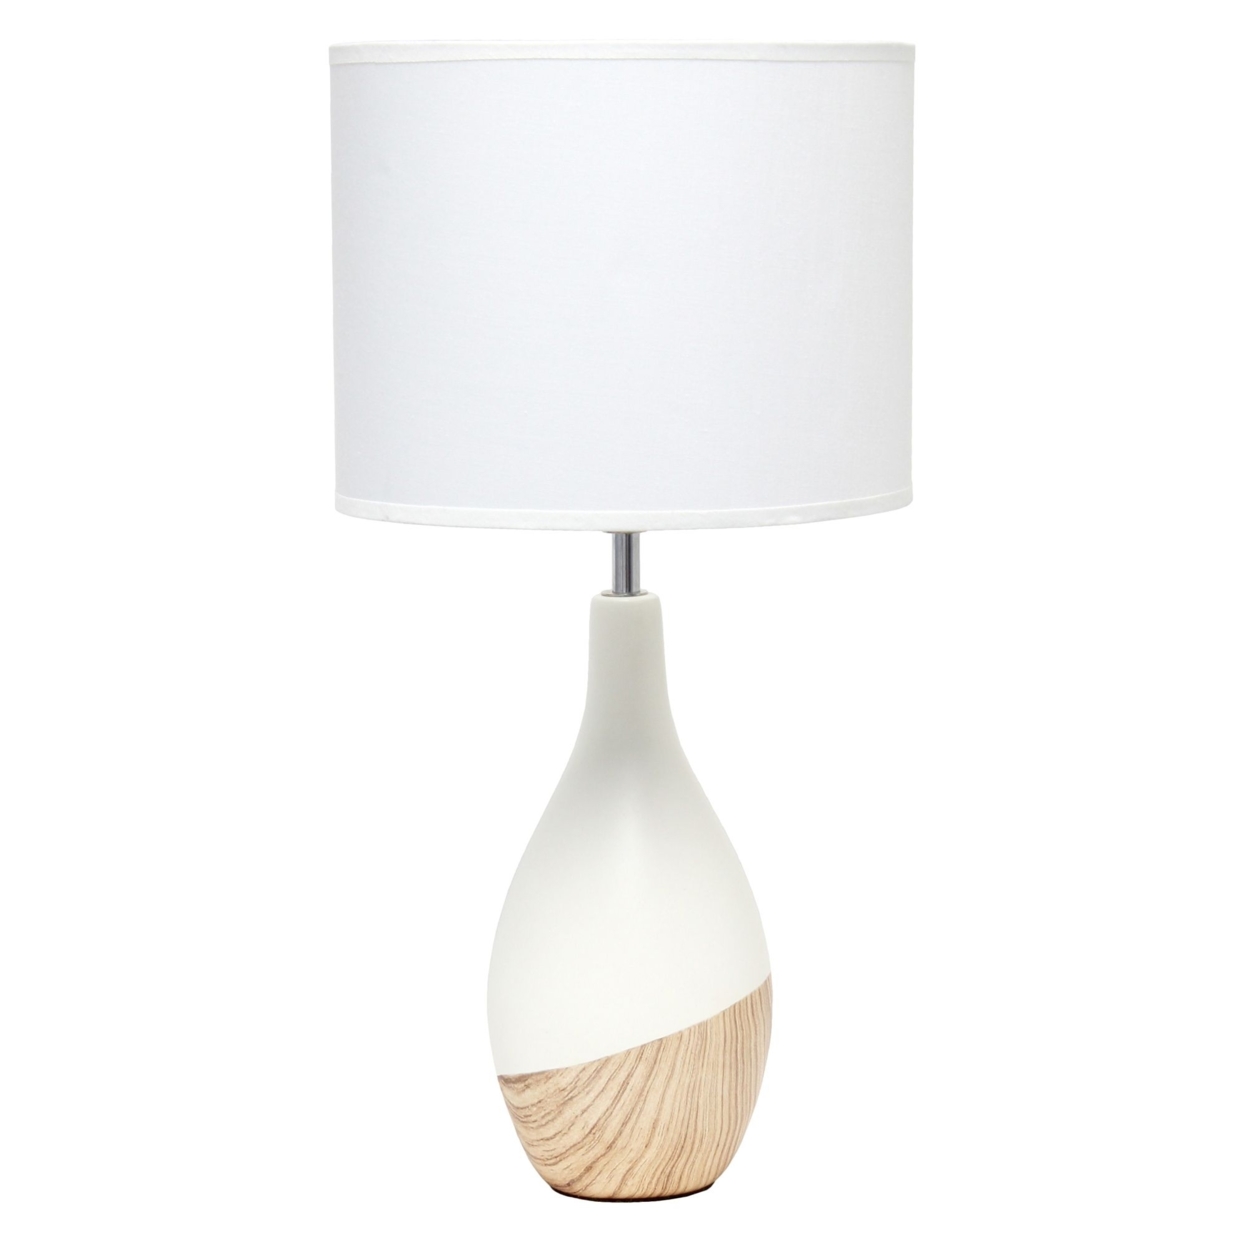 Simple Designs Strikers Basic Table Lamp, Light Wood